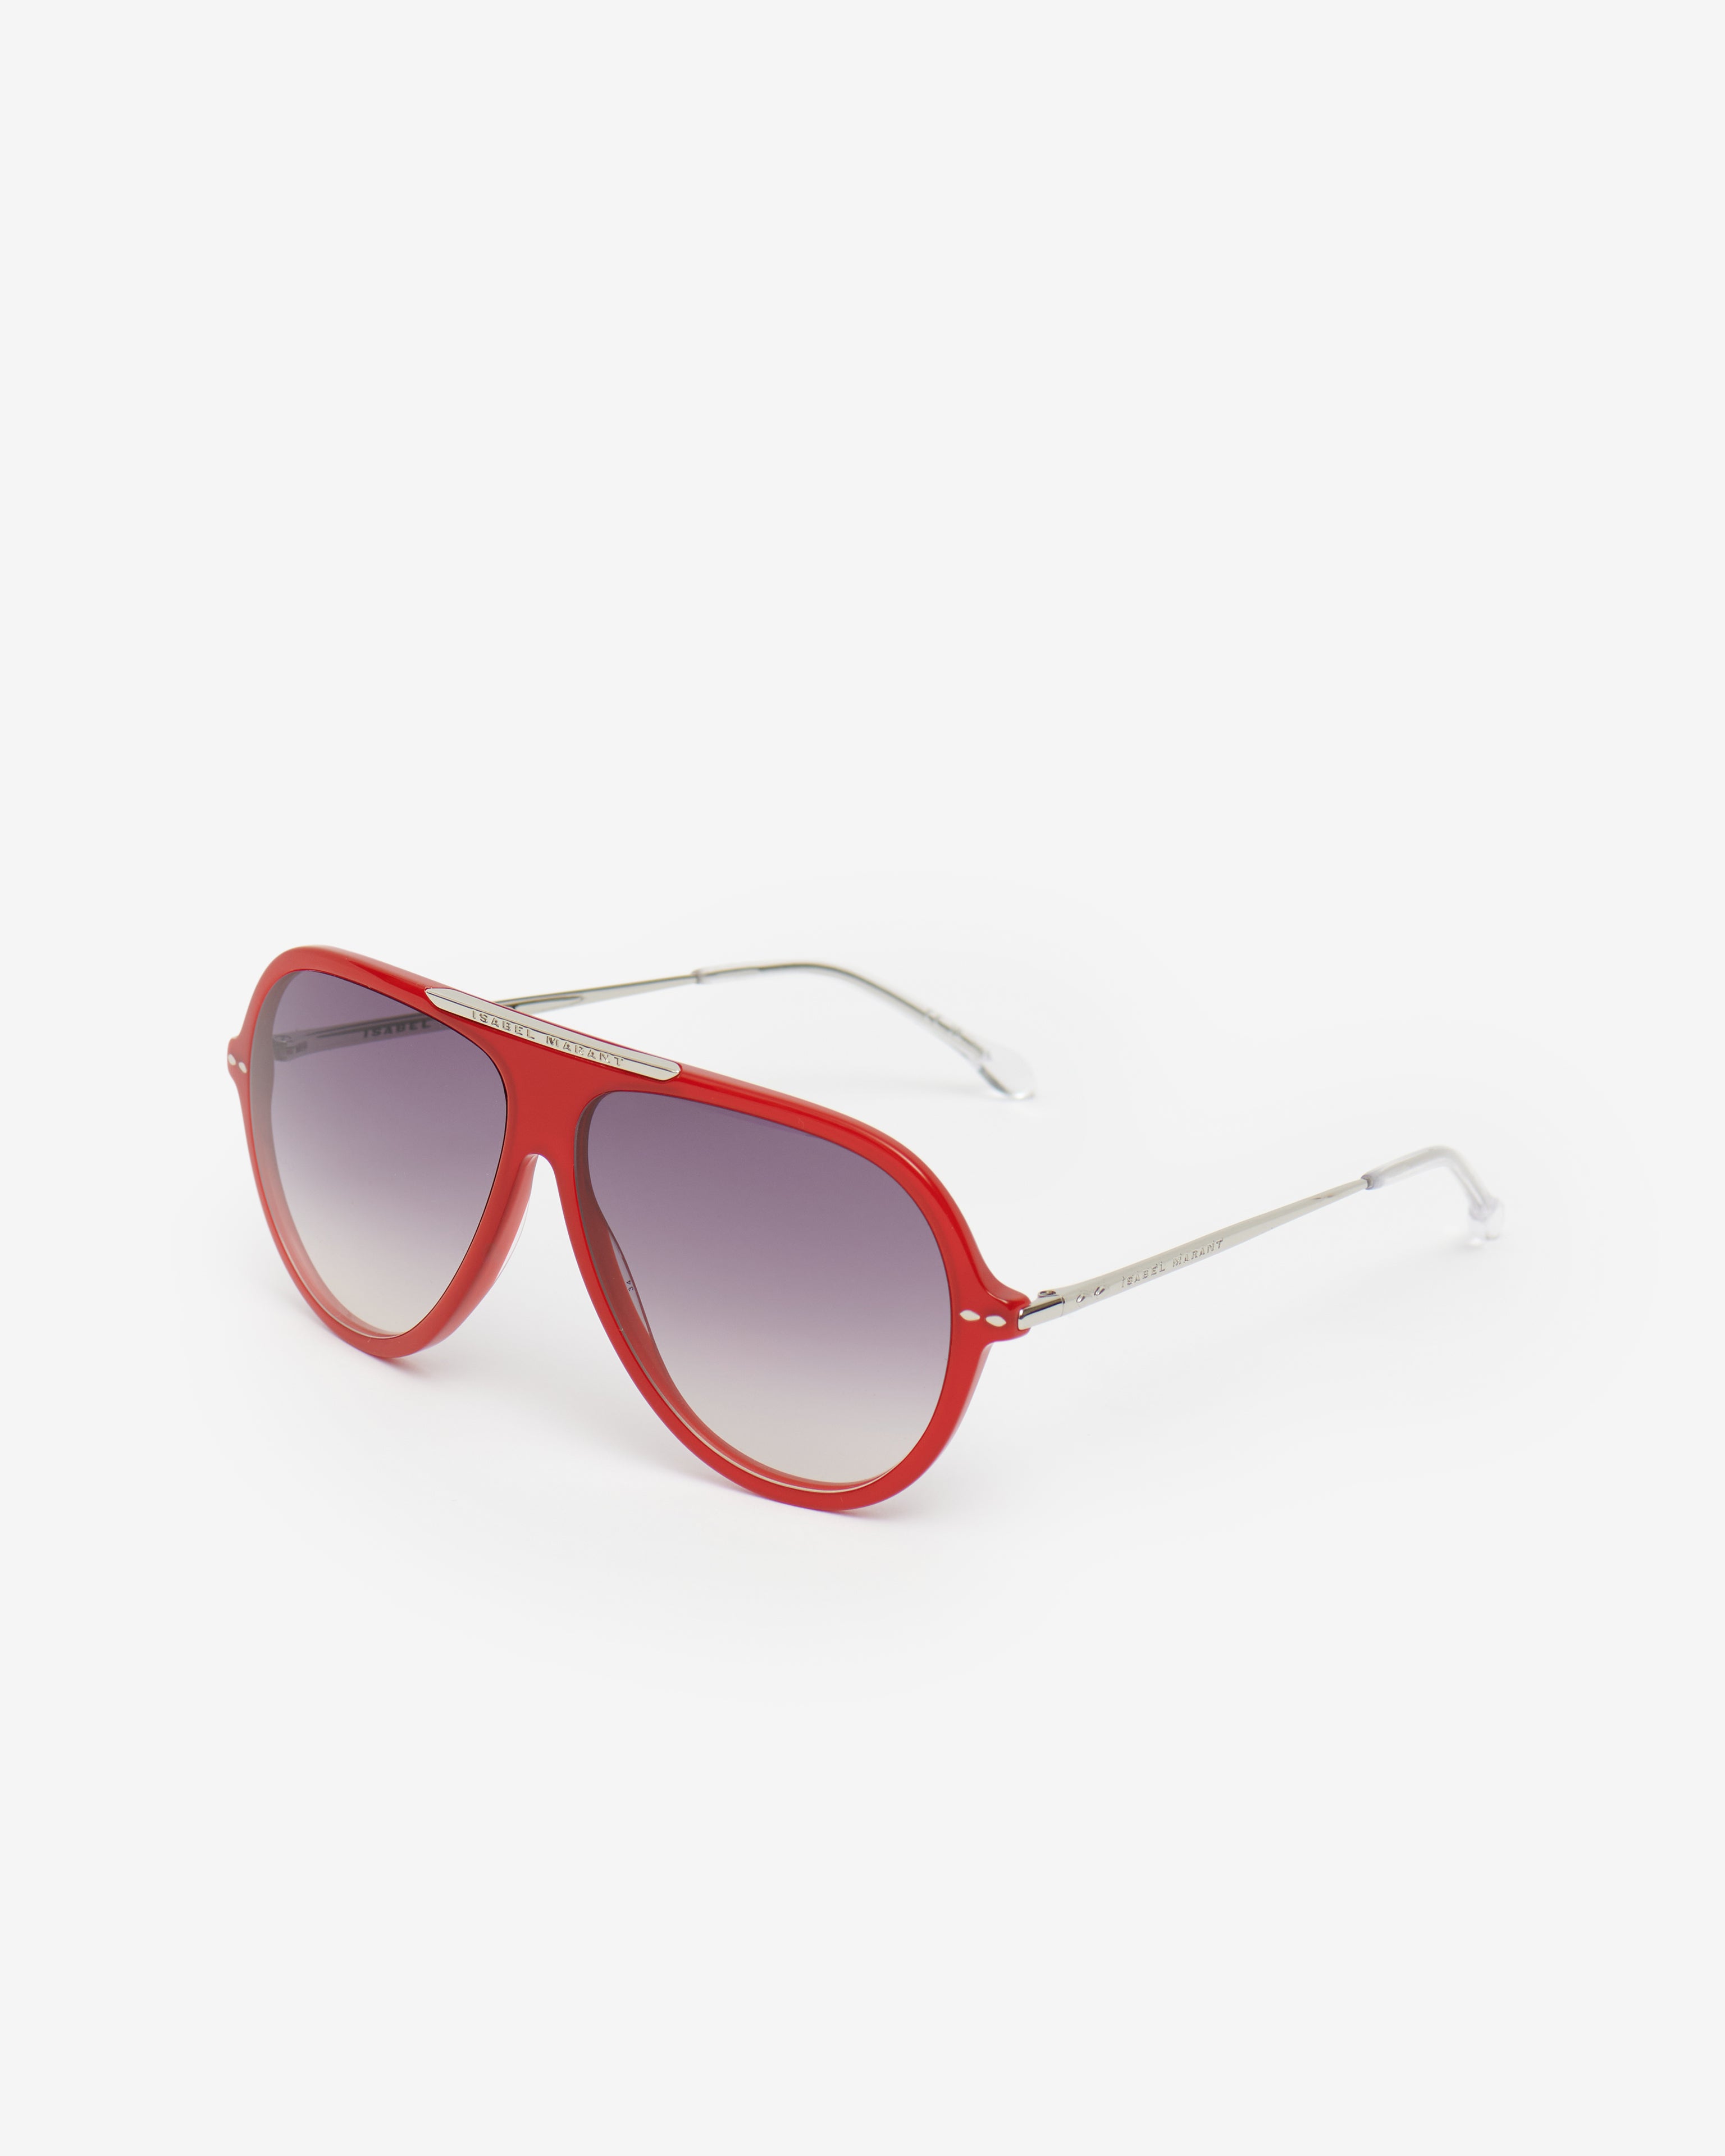 Hera sunglasses Woman Red silver-dark gray 2